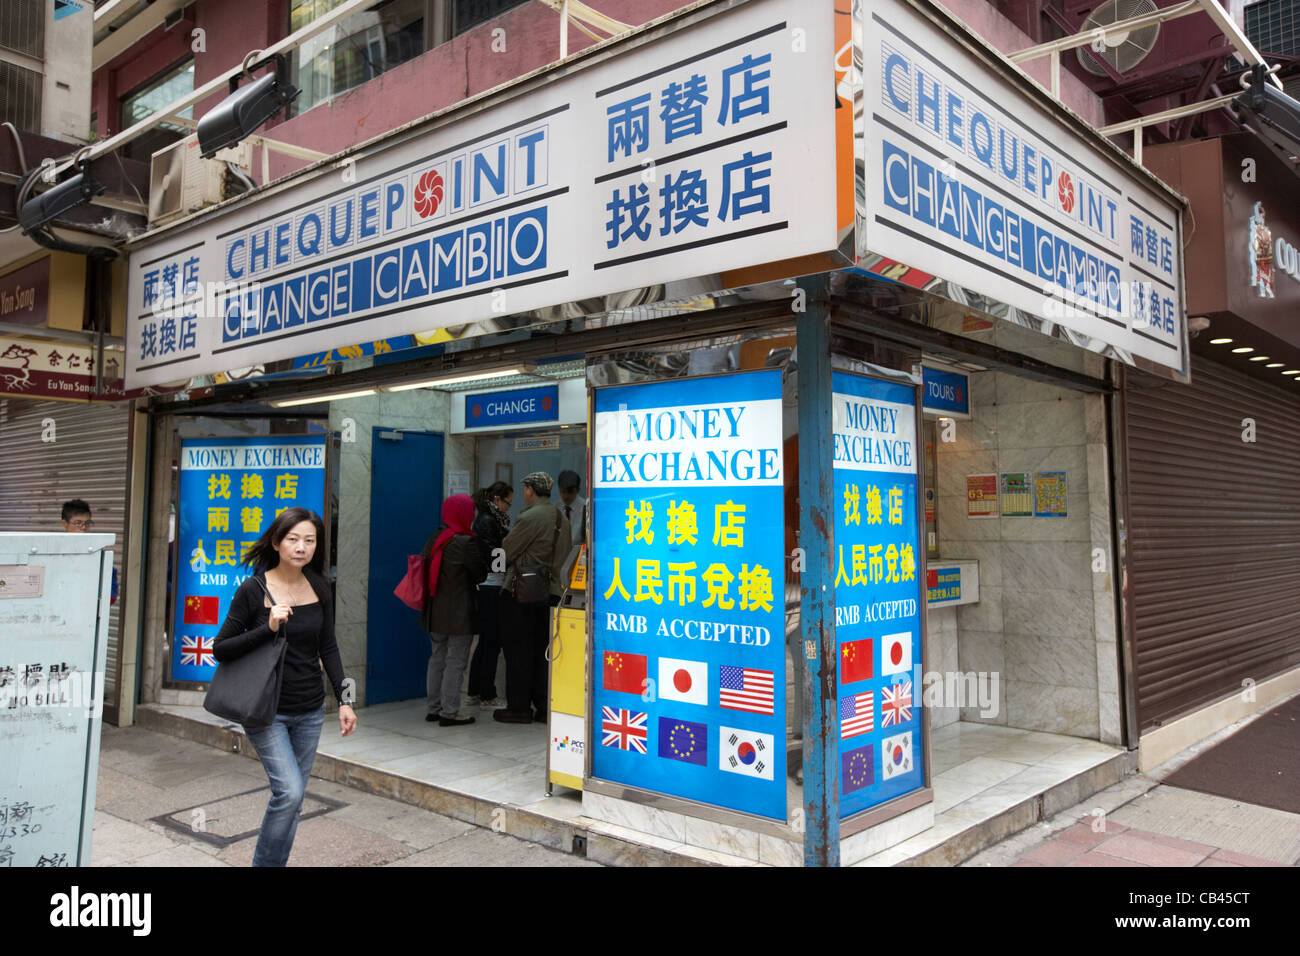 chequepoint money exchange change cambio tsim sha tsui kowloon hong kong hksar china Stock Photo